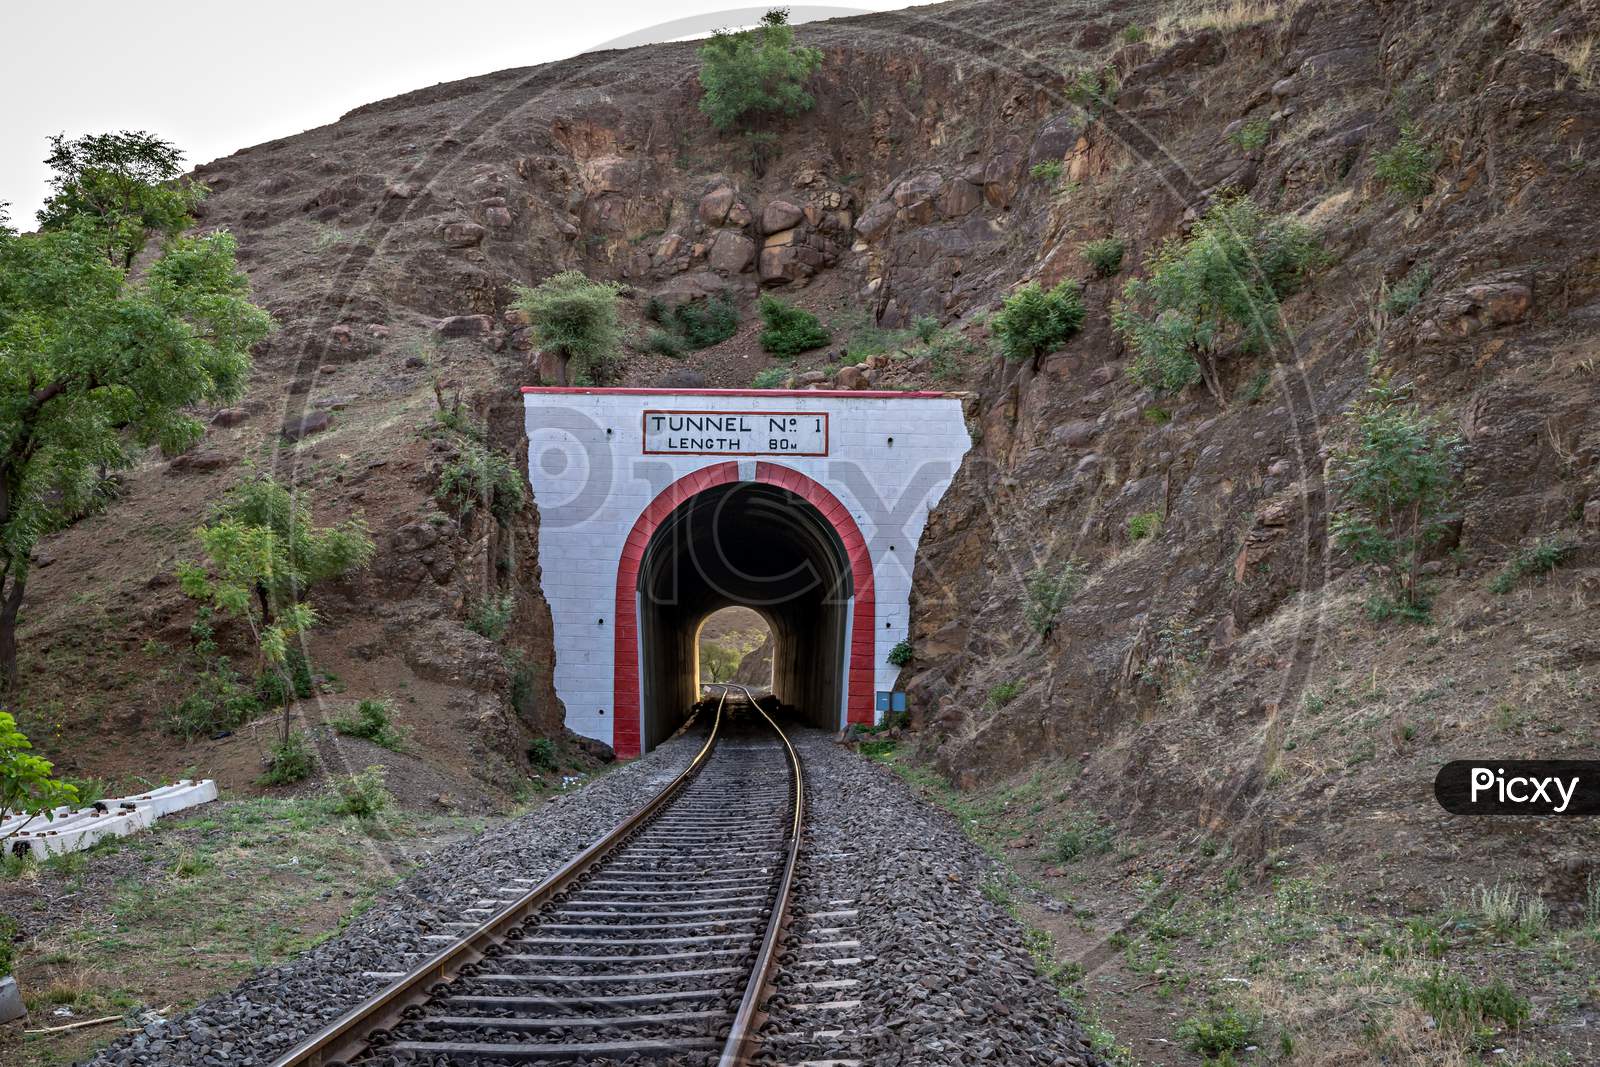 Photo Of A Railway Track Passing Through A Tunnel Cut Through A Rocky Hill.